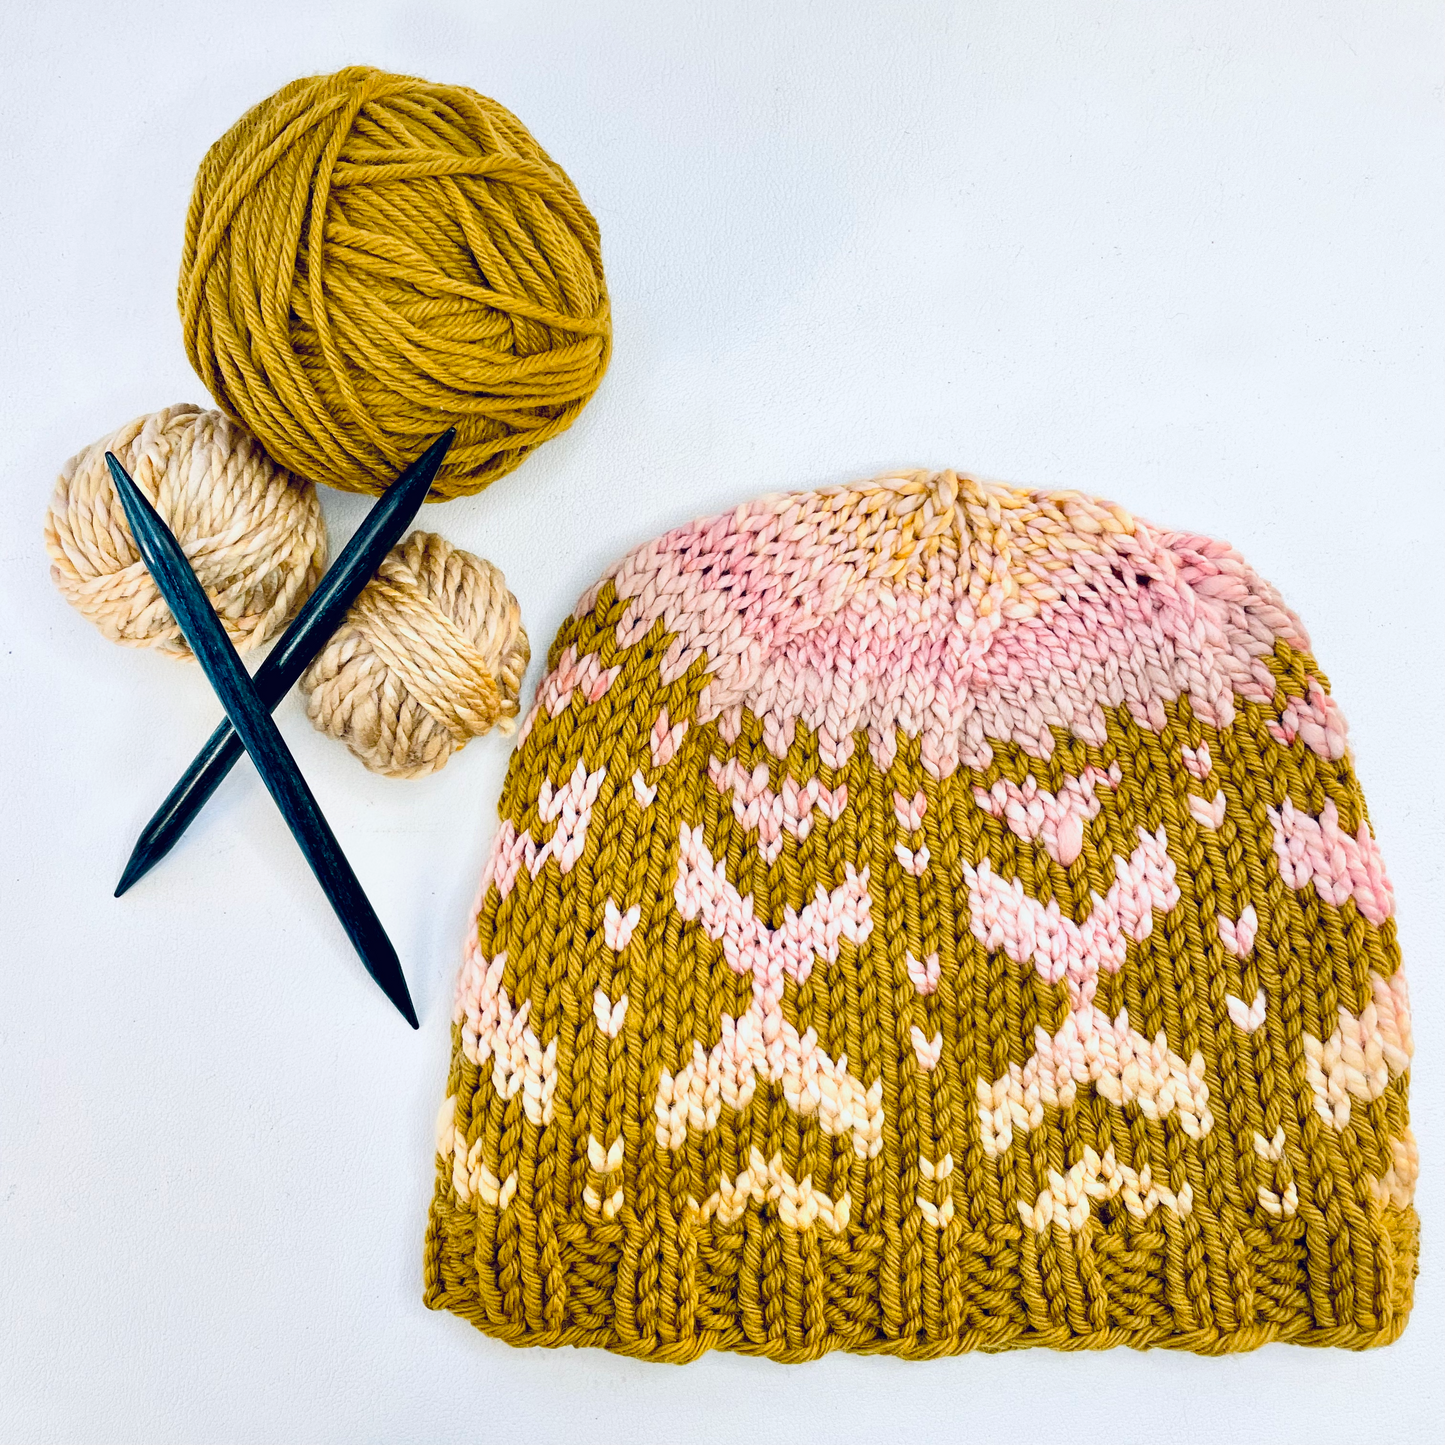 Learn to Knit Stranded Colorwork - Laurel Garcia